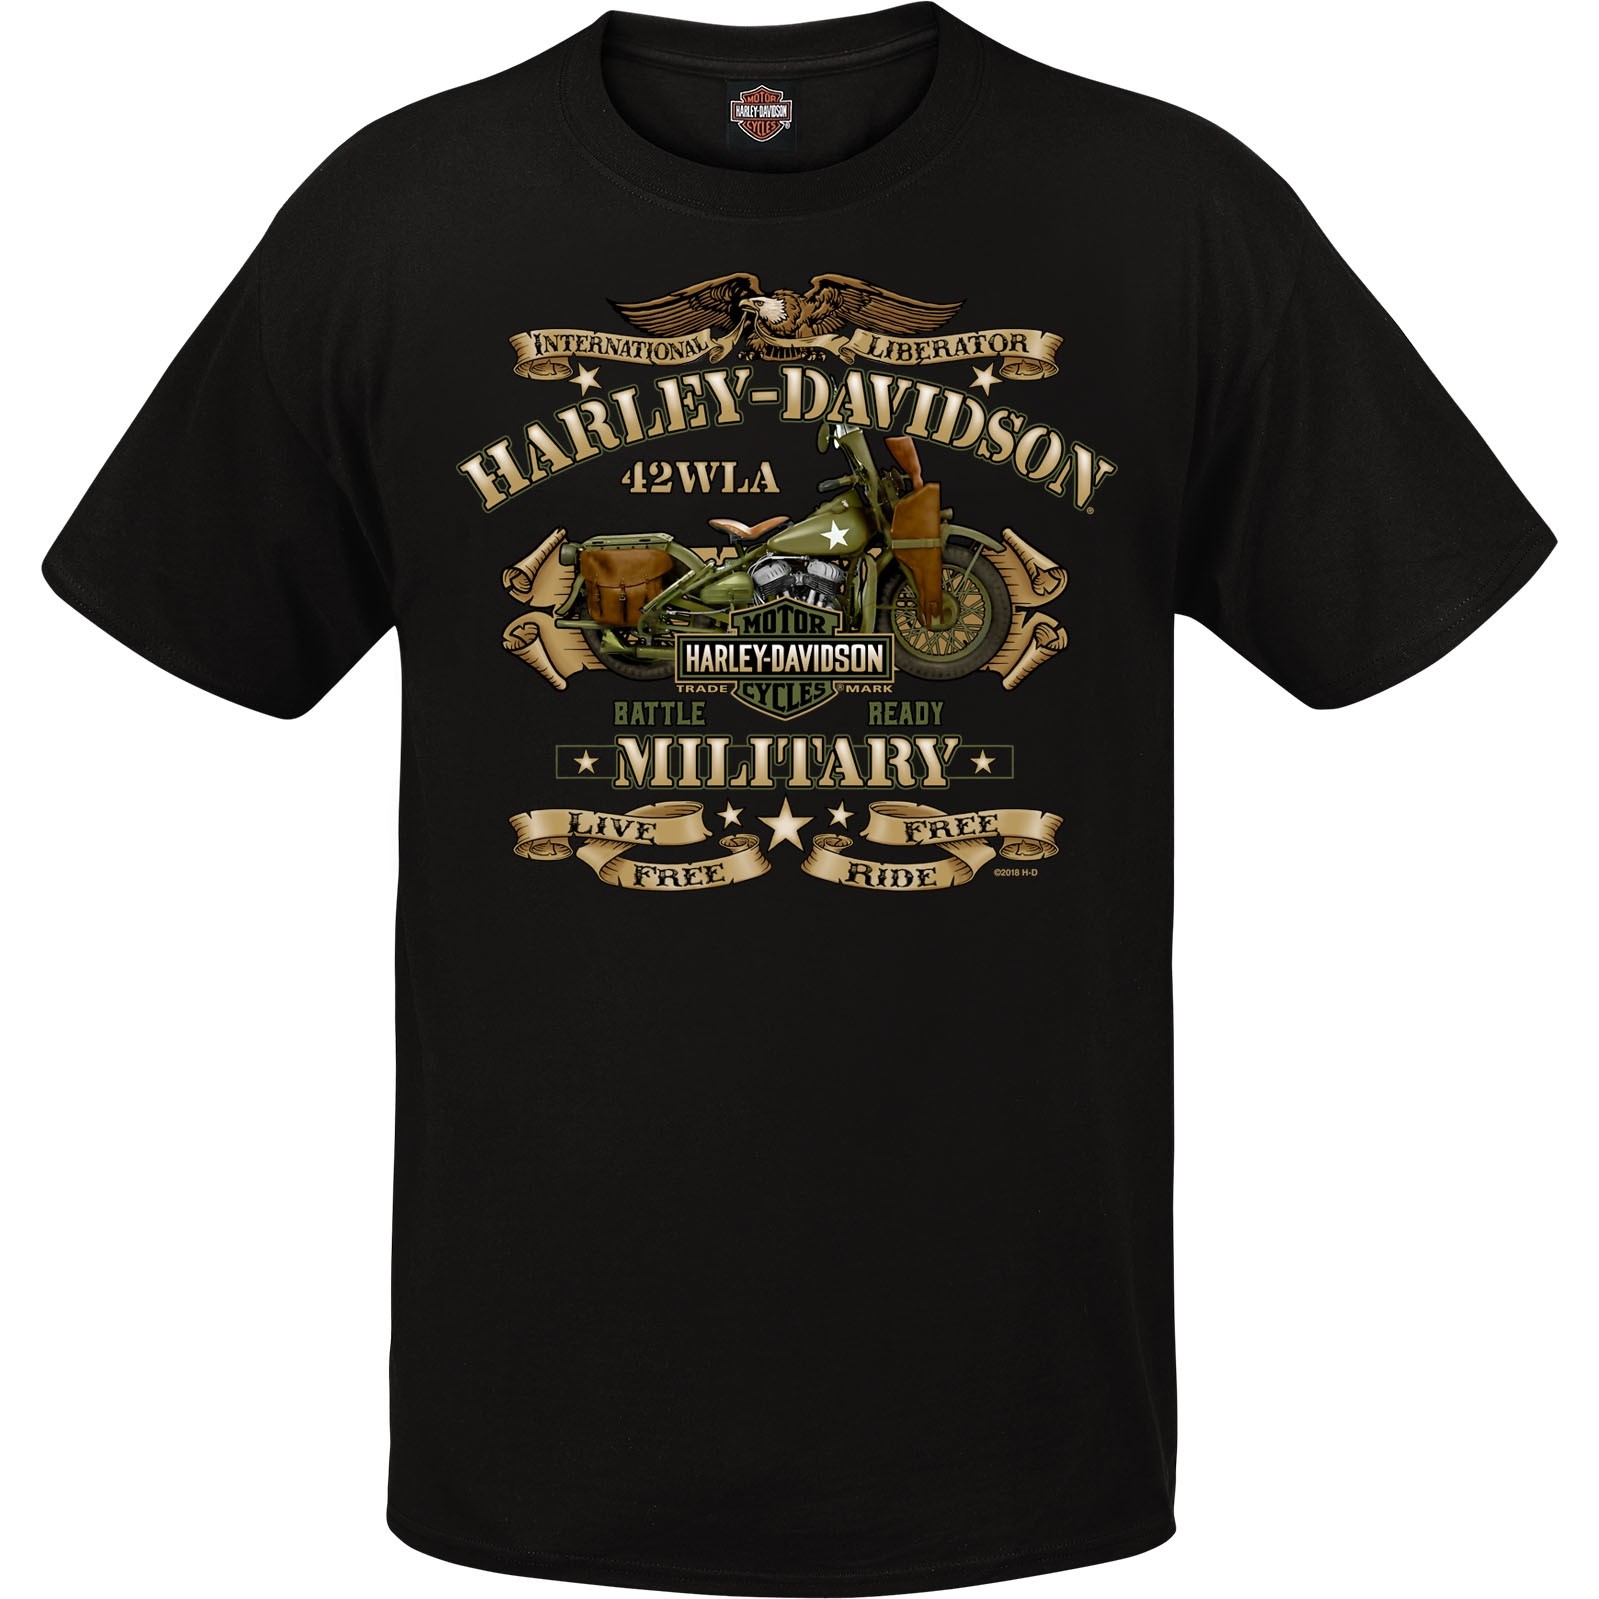  Harley Davidson Military Men s Graphic T shirt Overseas 